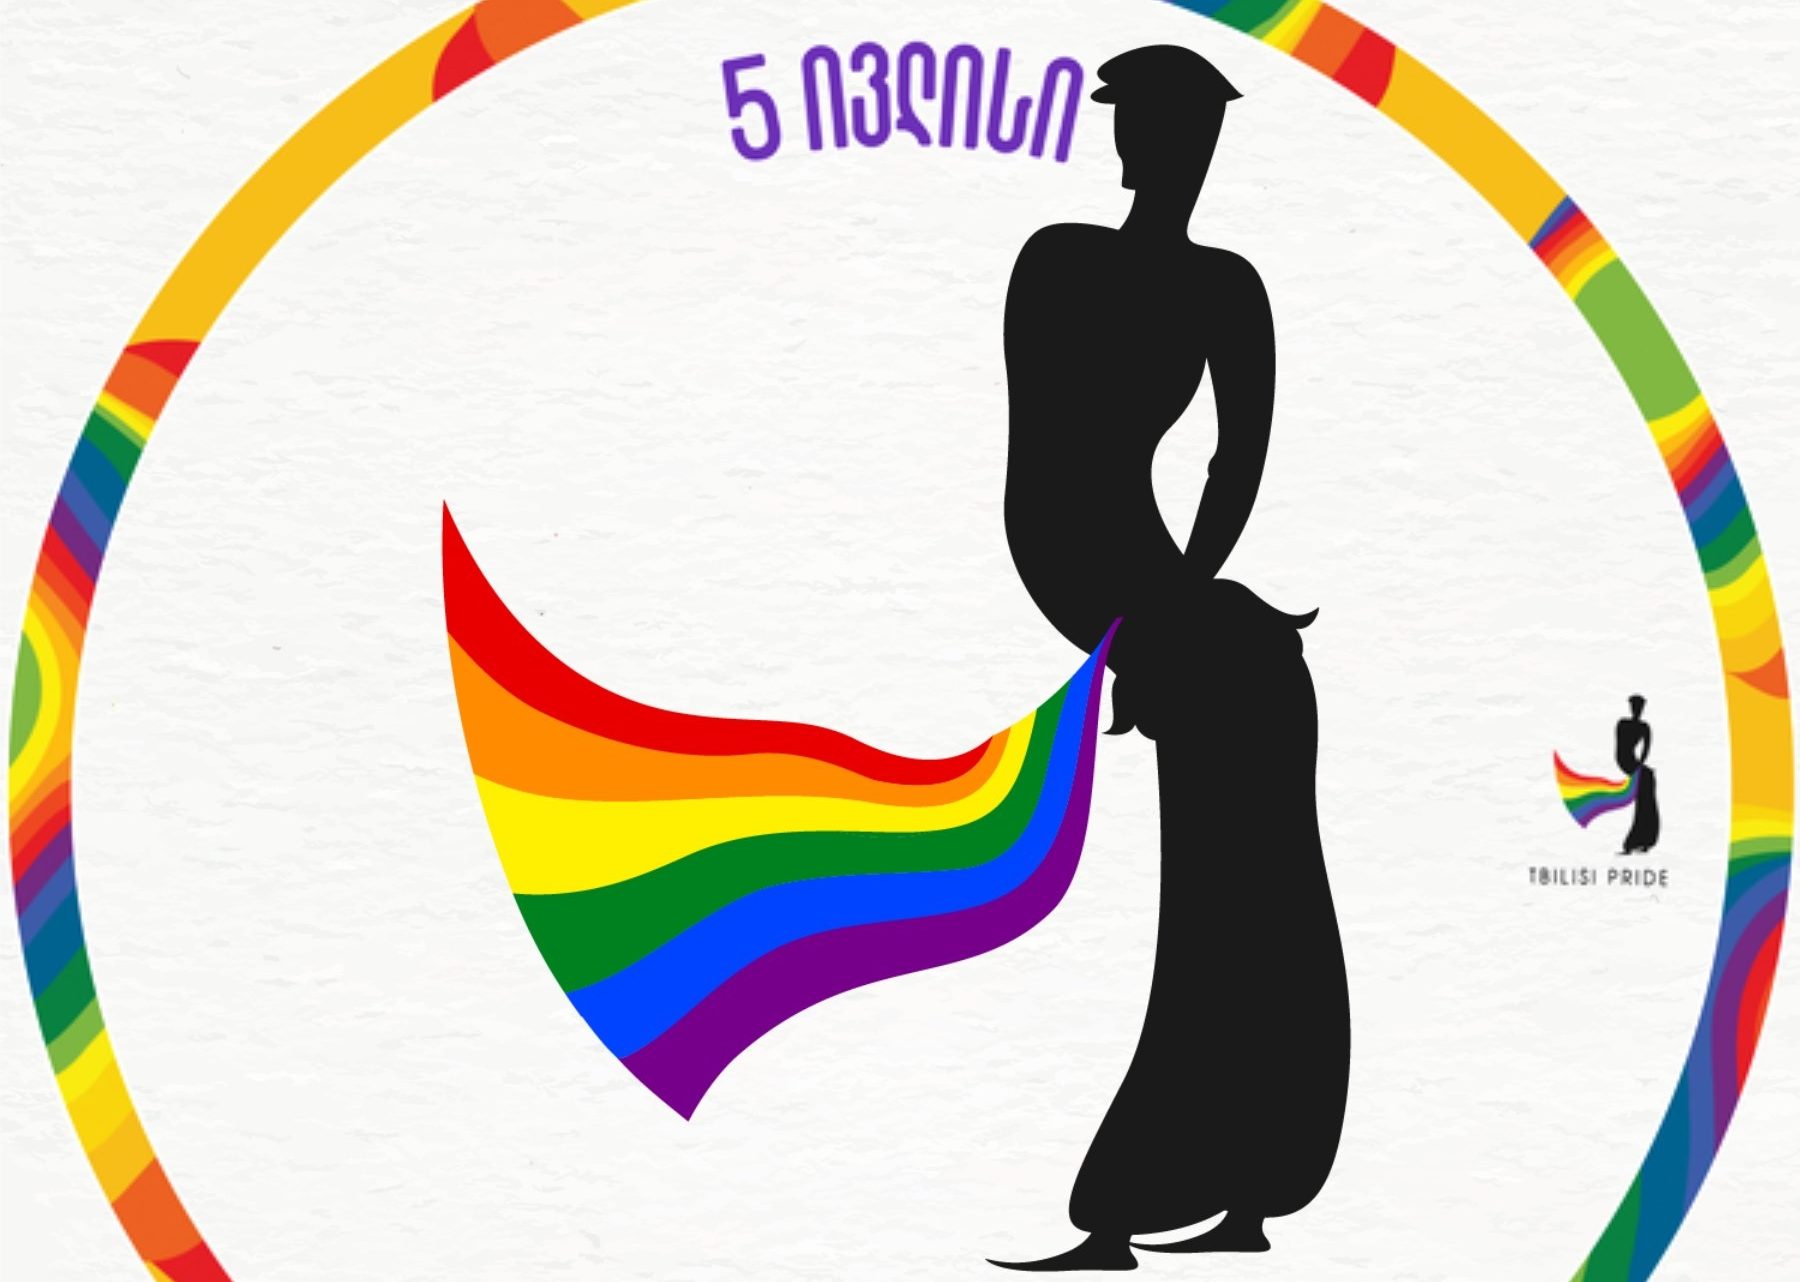 tbilisi pride e1625465978777 новости 5 июля, Tbilisi Pride, АМЮГ, ЛГБТ